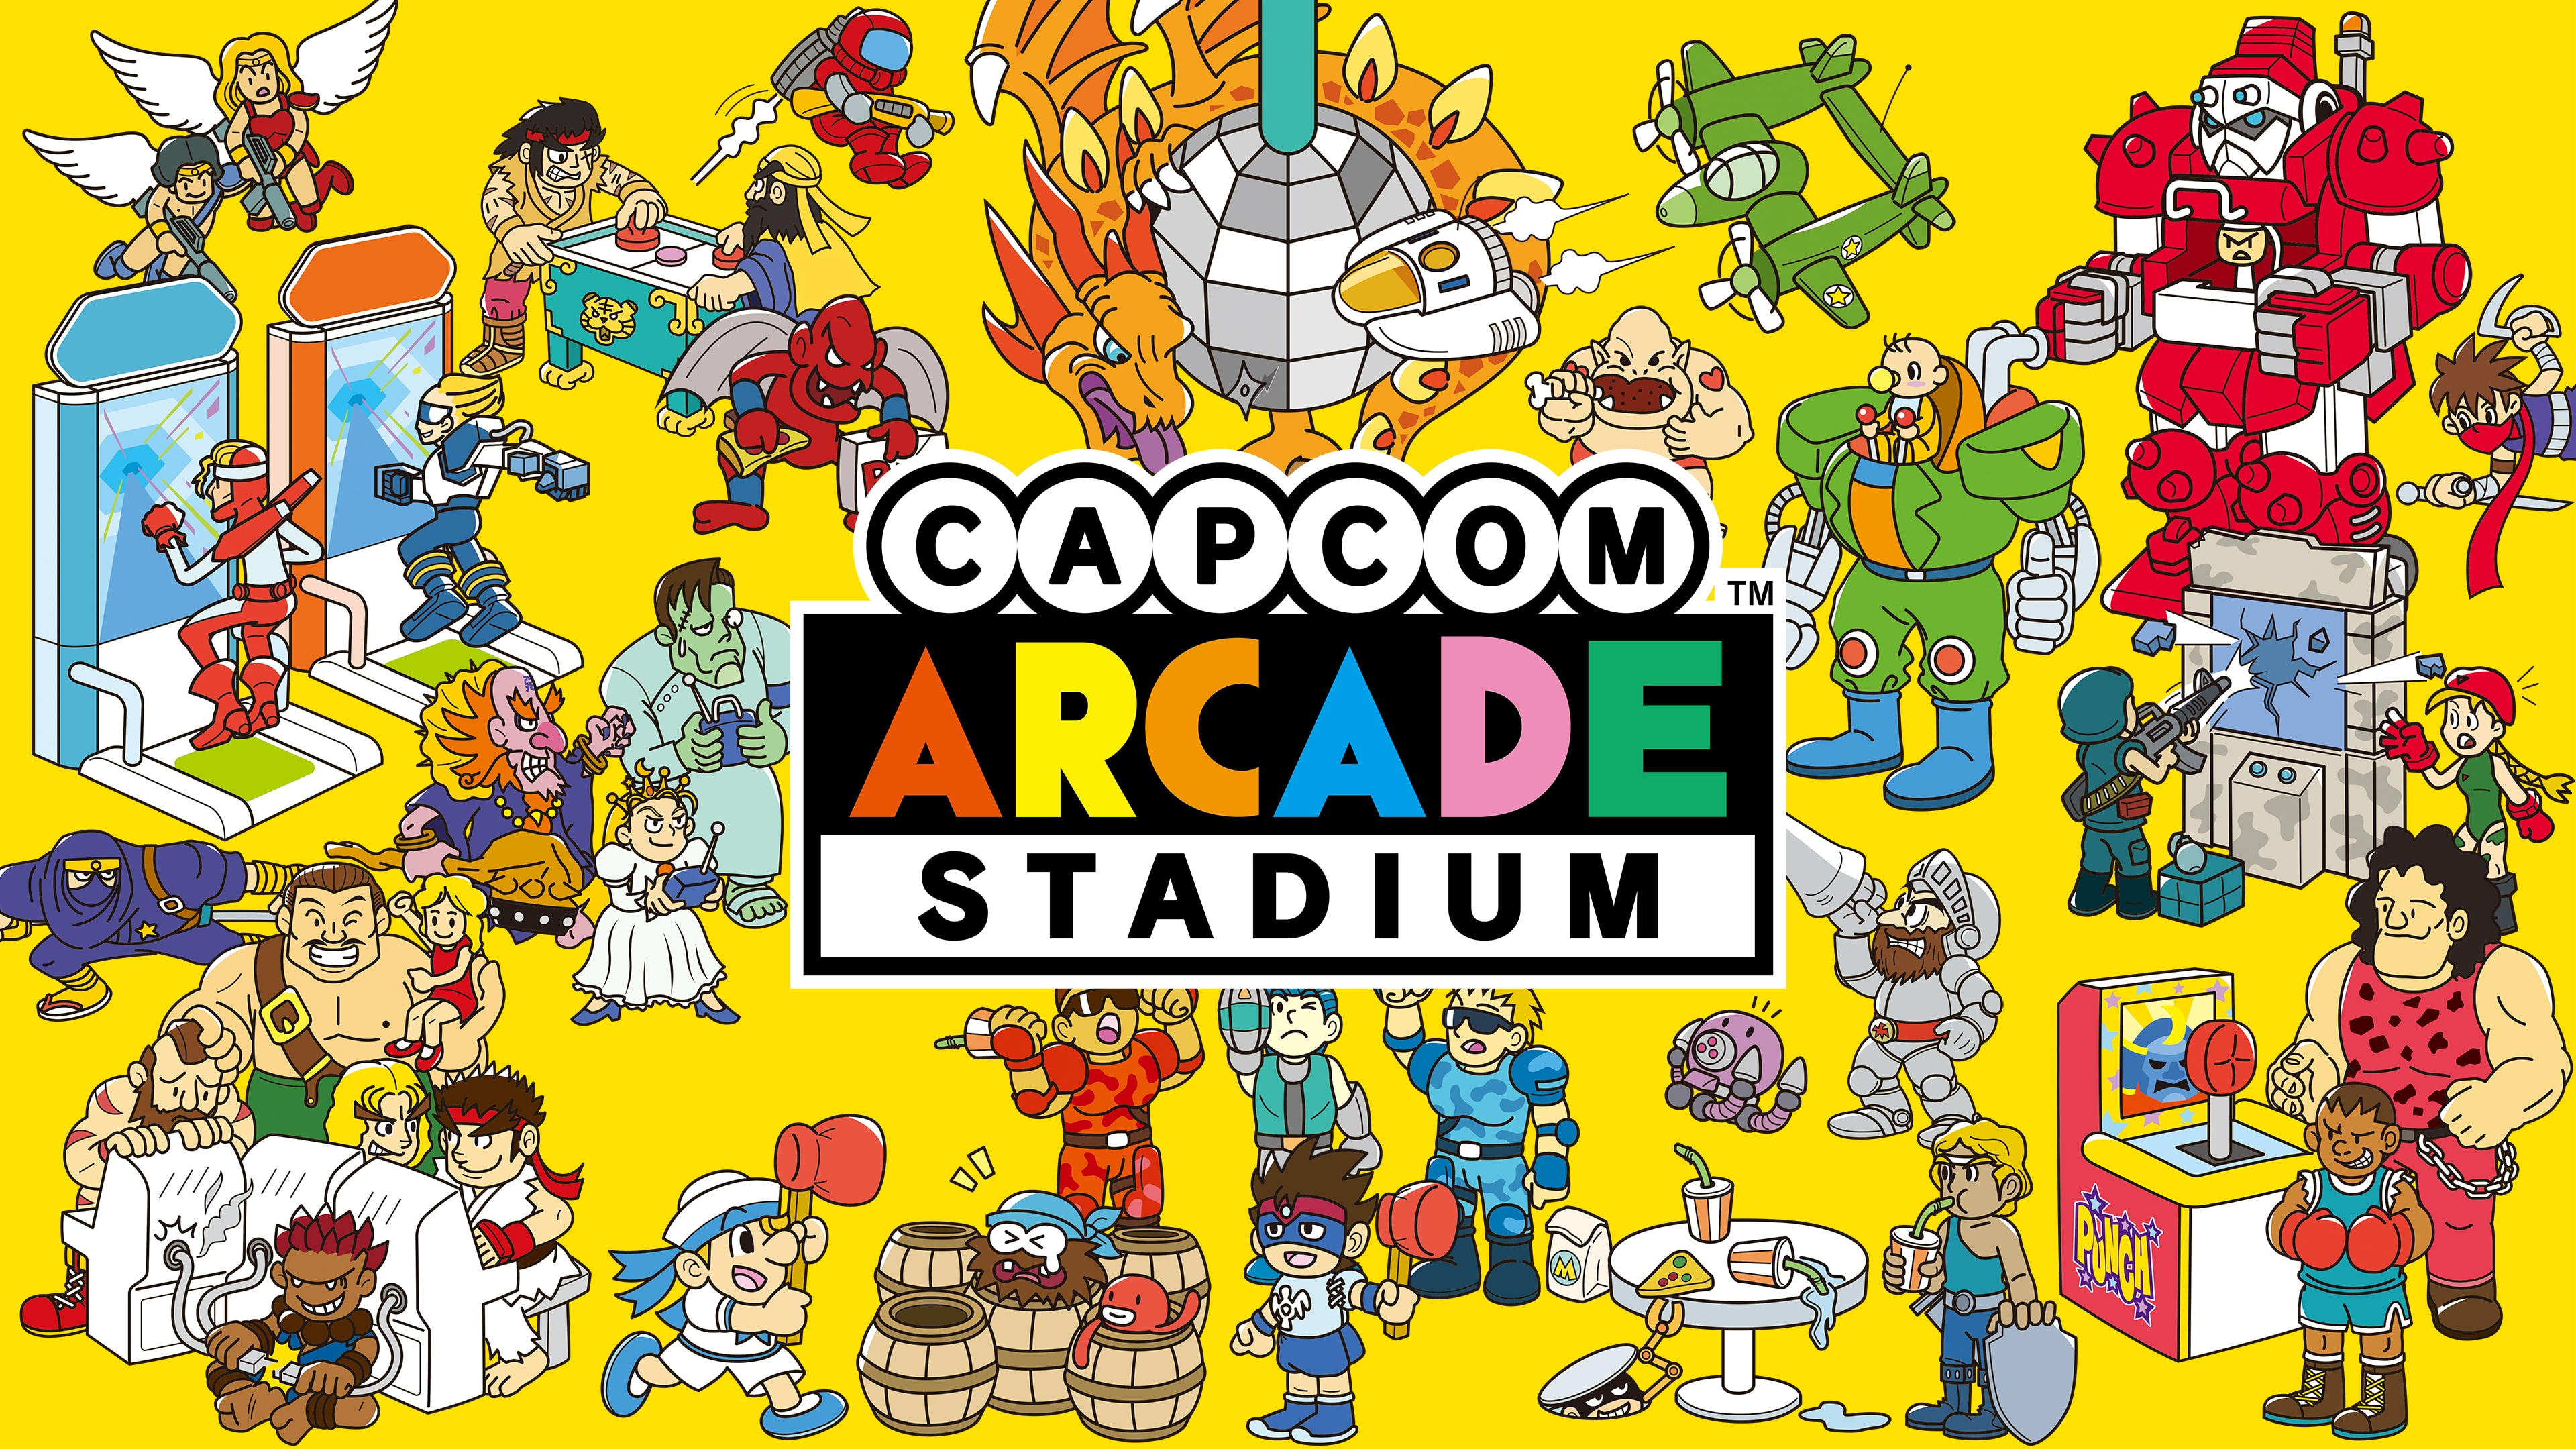 Capcom Arcade Stadium (중국어(간체자), 한국어, 태국어, 영어, 일본어, 중국어(번체자))